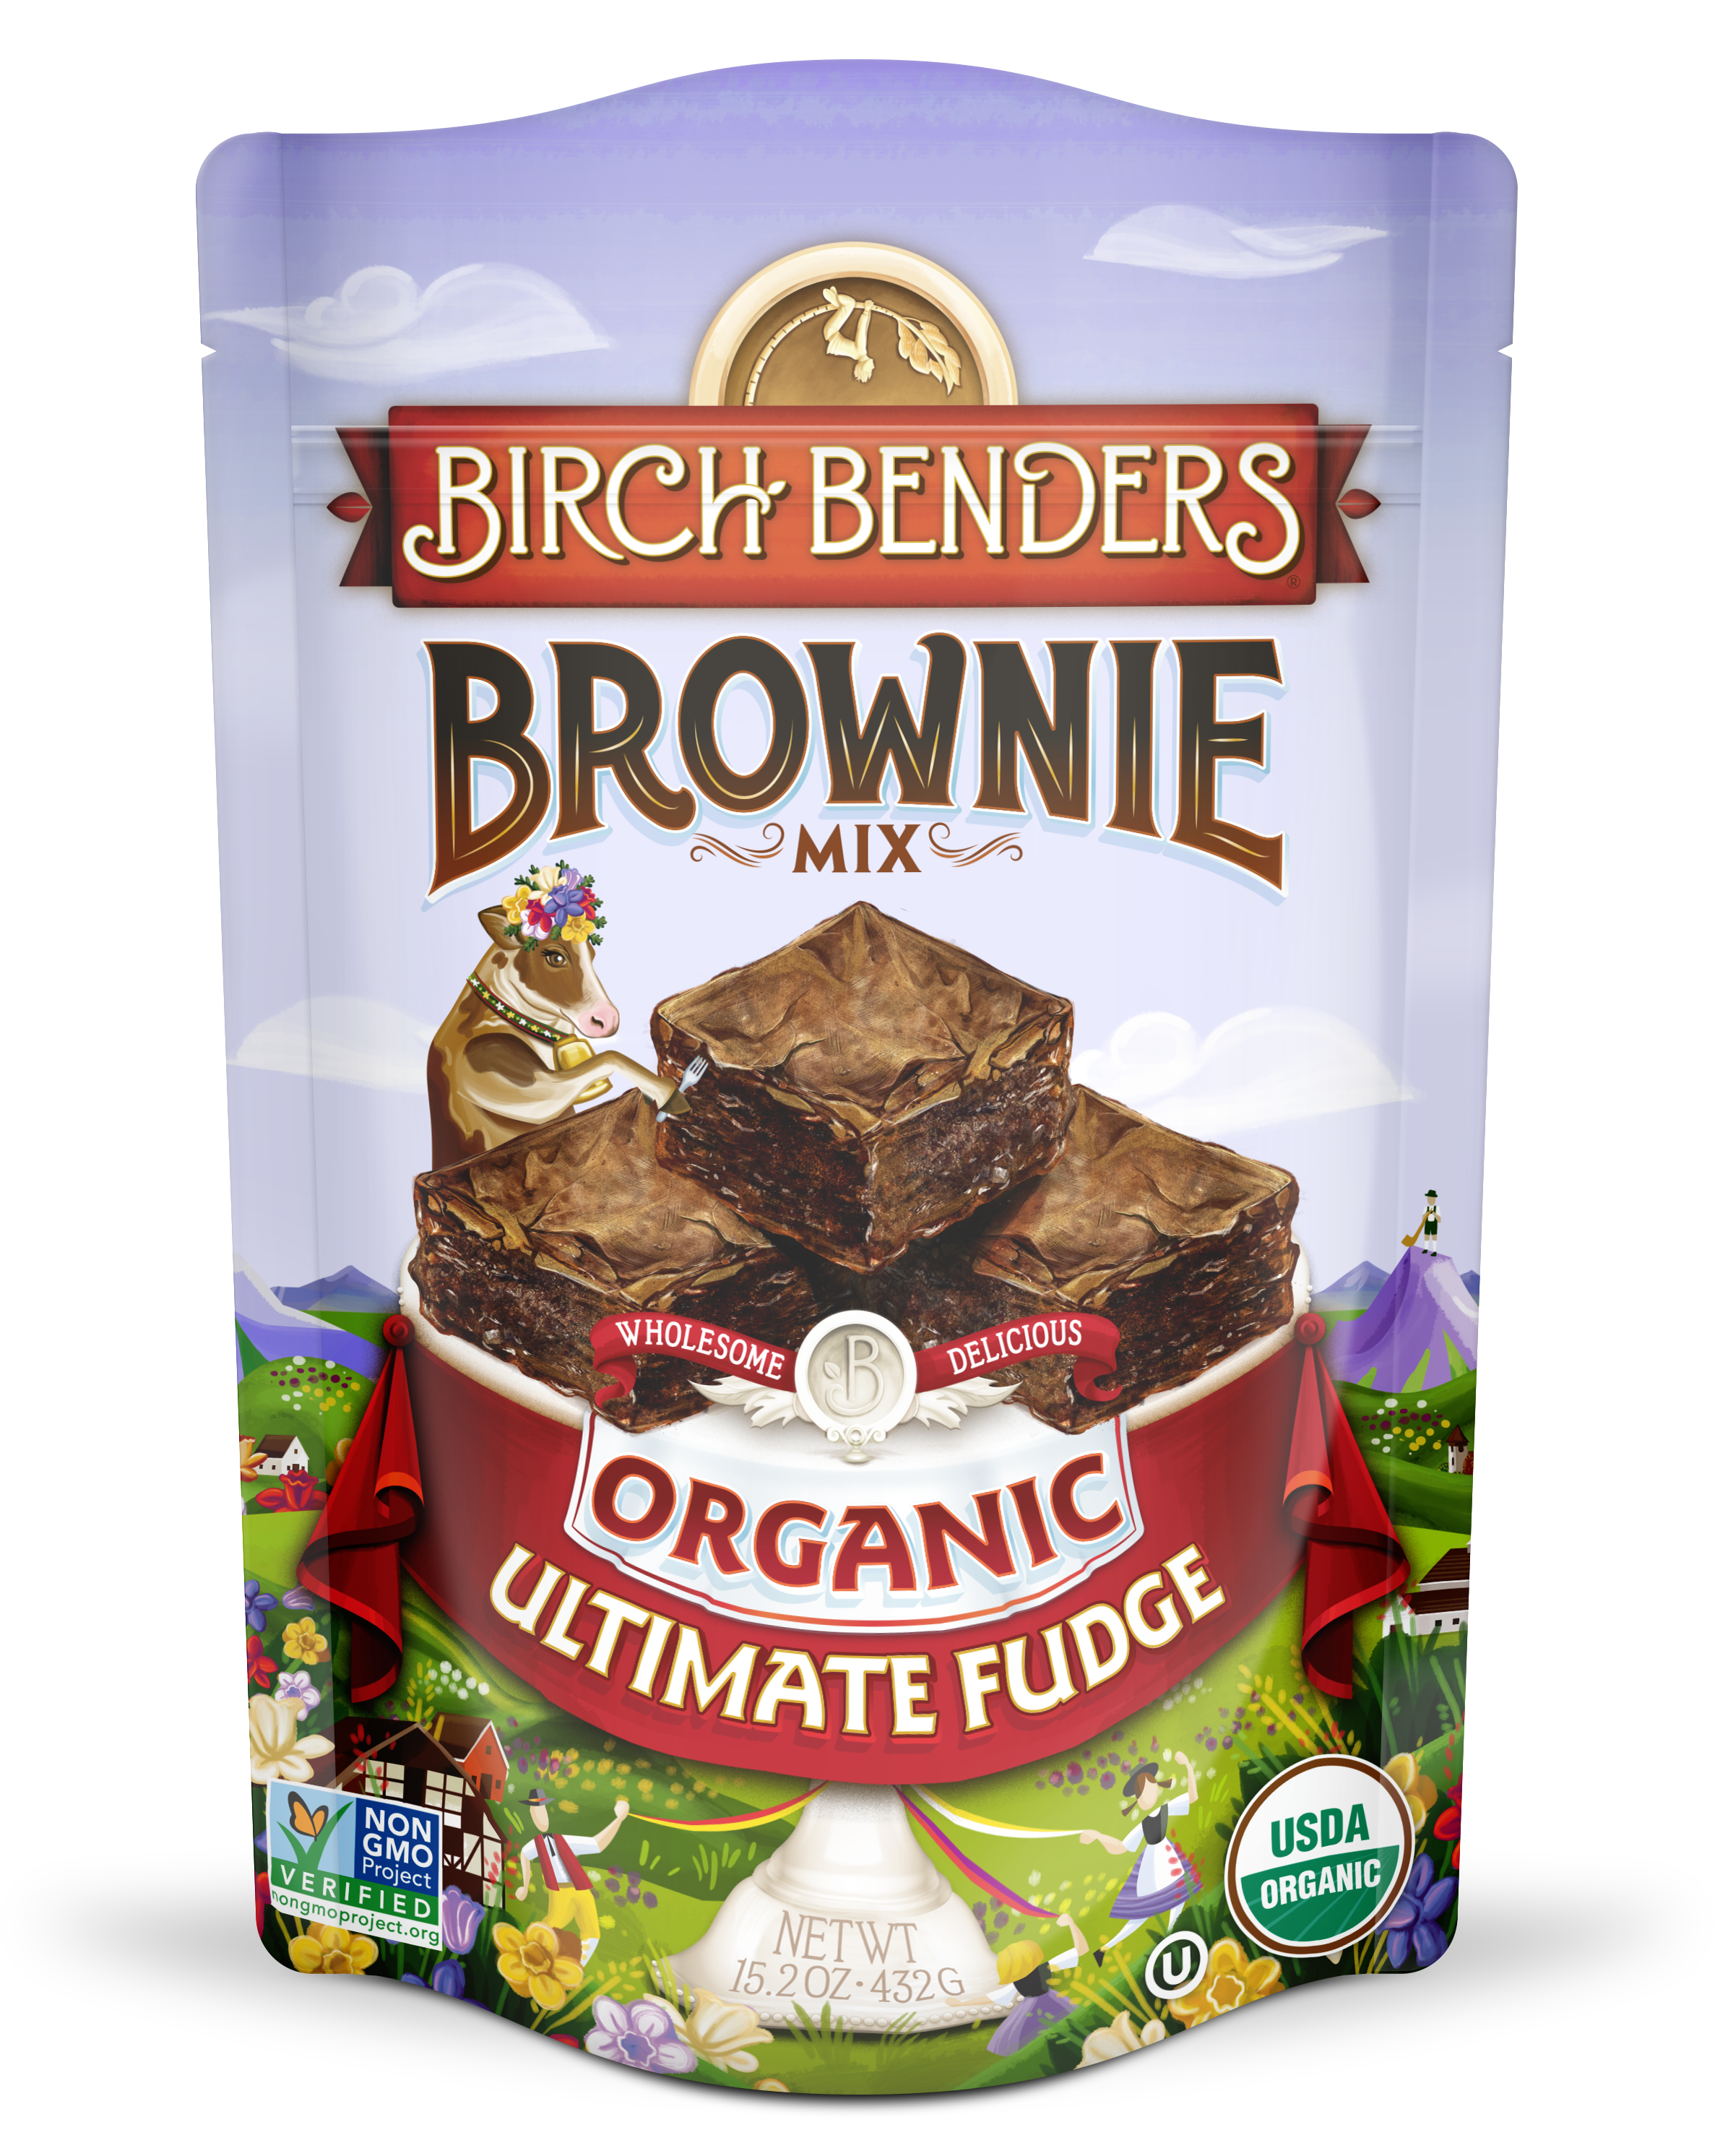 Organic Ultimate Fudge Brownie Mix